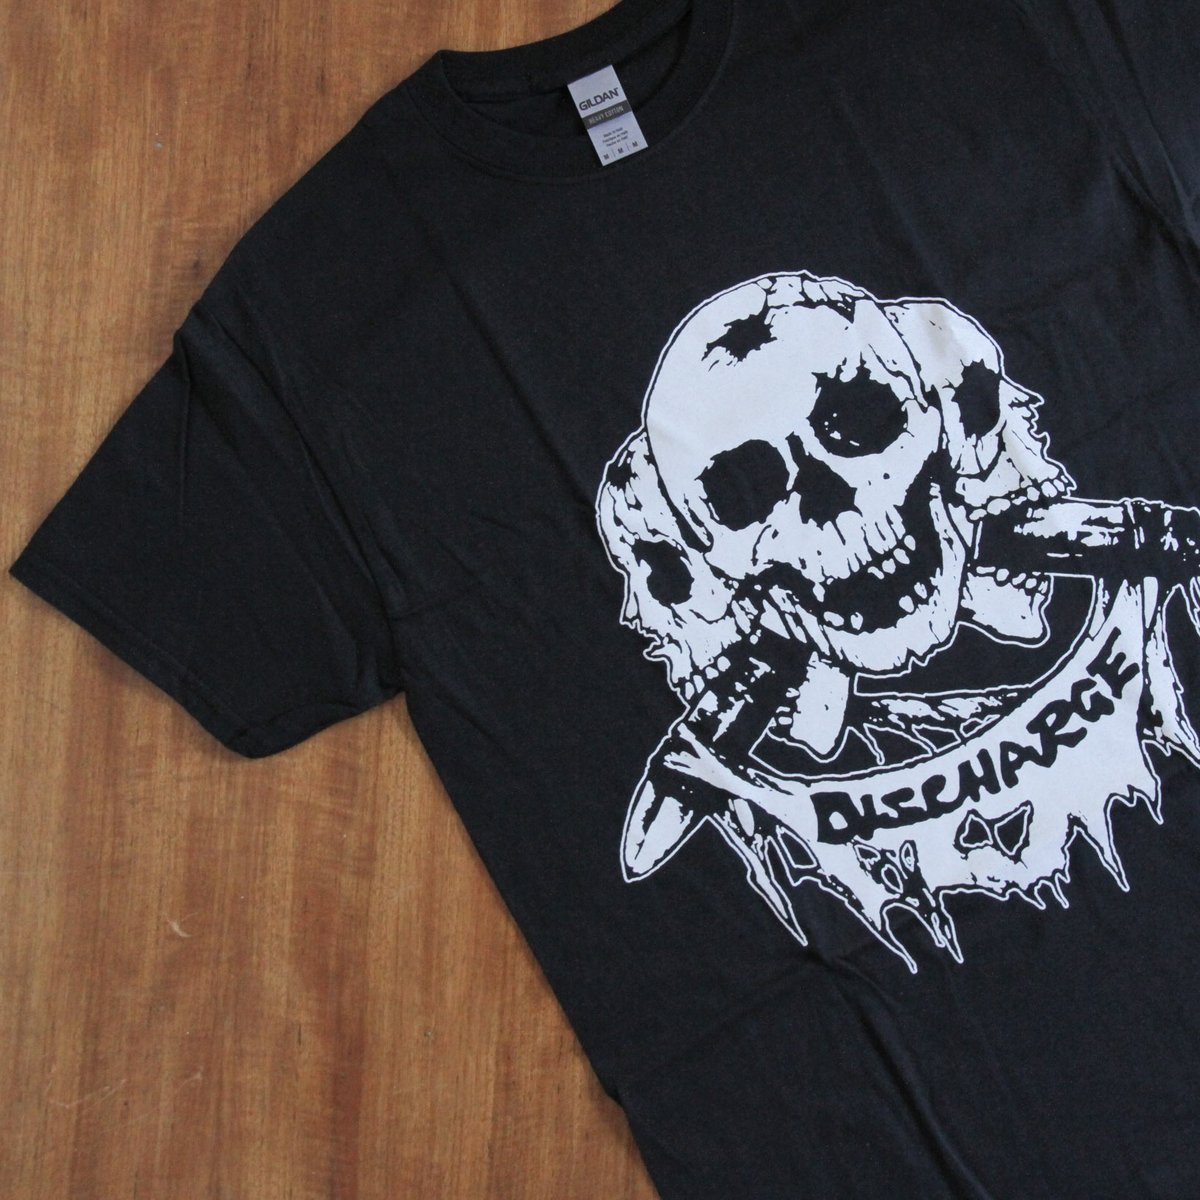 For Sale 
T-Shirt Discharge Gildan Heavy Cotton Size M 350K  

Order Now: 
Bukalapak bukalapak.com/u/acerocker77
Tokopedia tokopedia.com/kiba777 

#jajanrock #kaosband #kaosmusik #musicmerch #discharge #punkrock #punk